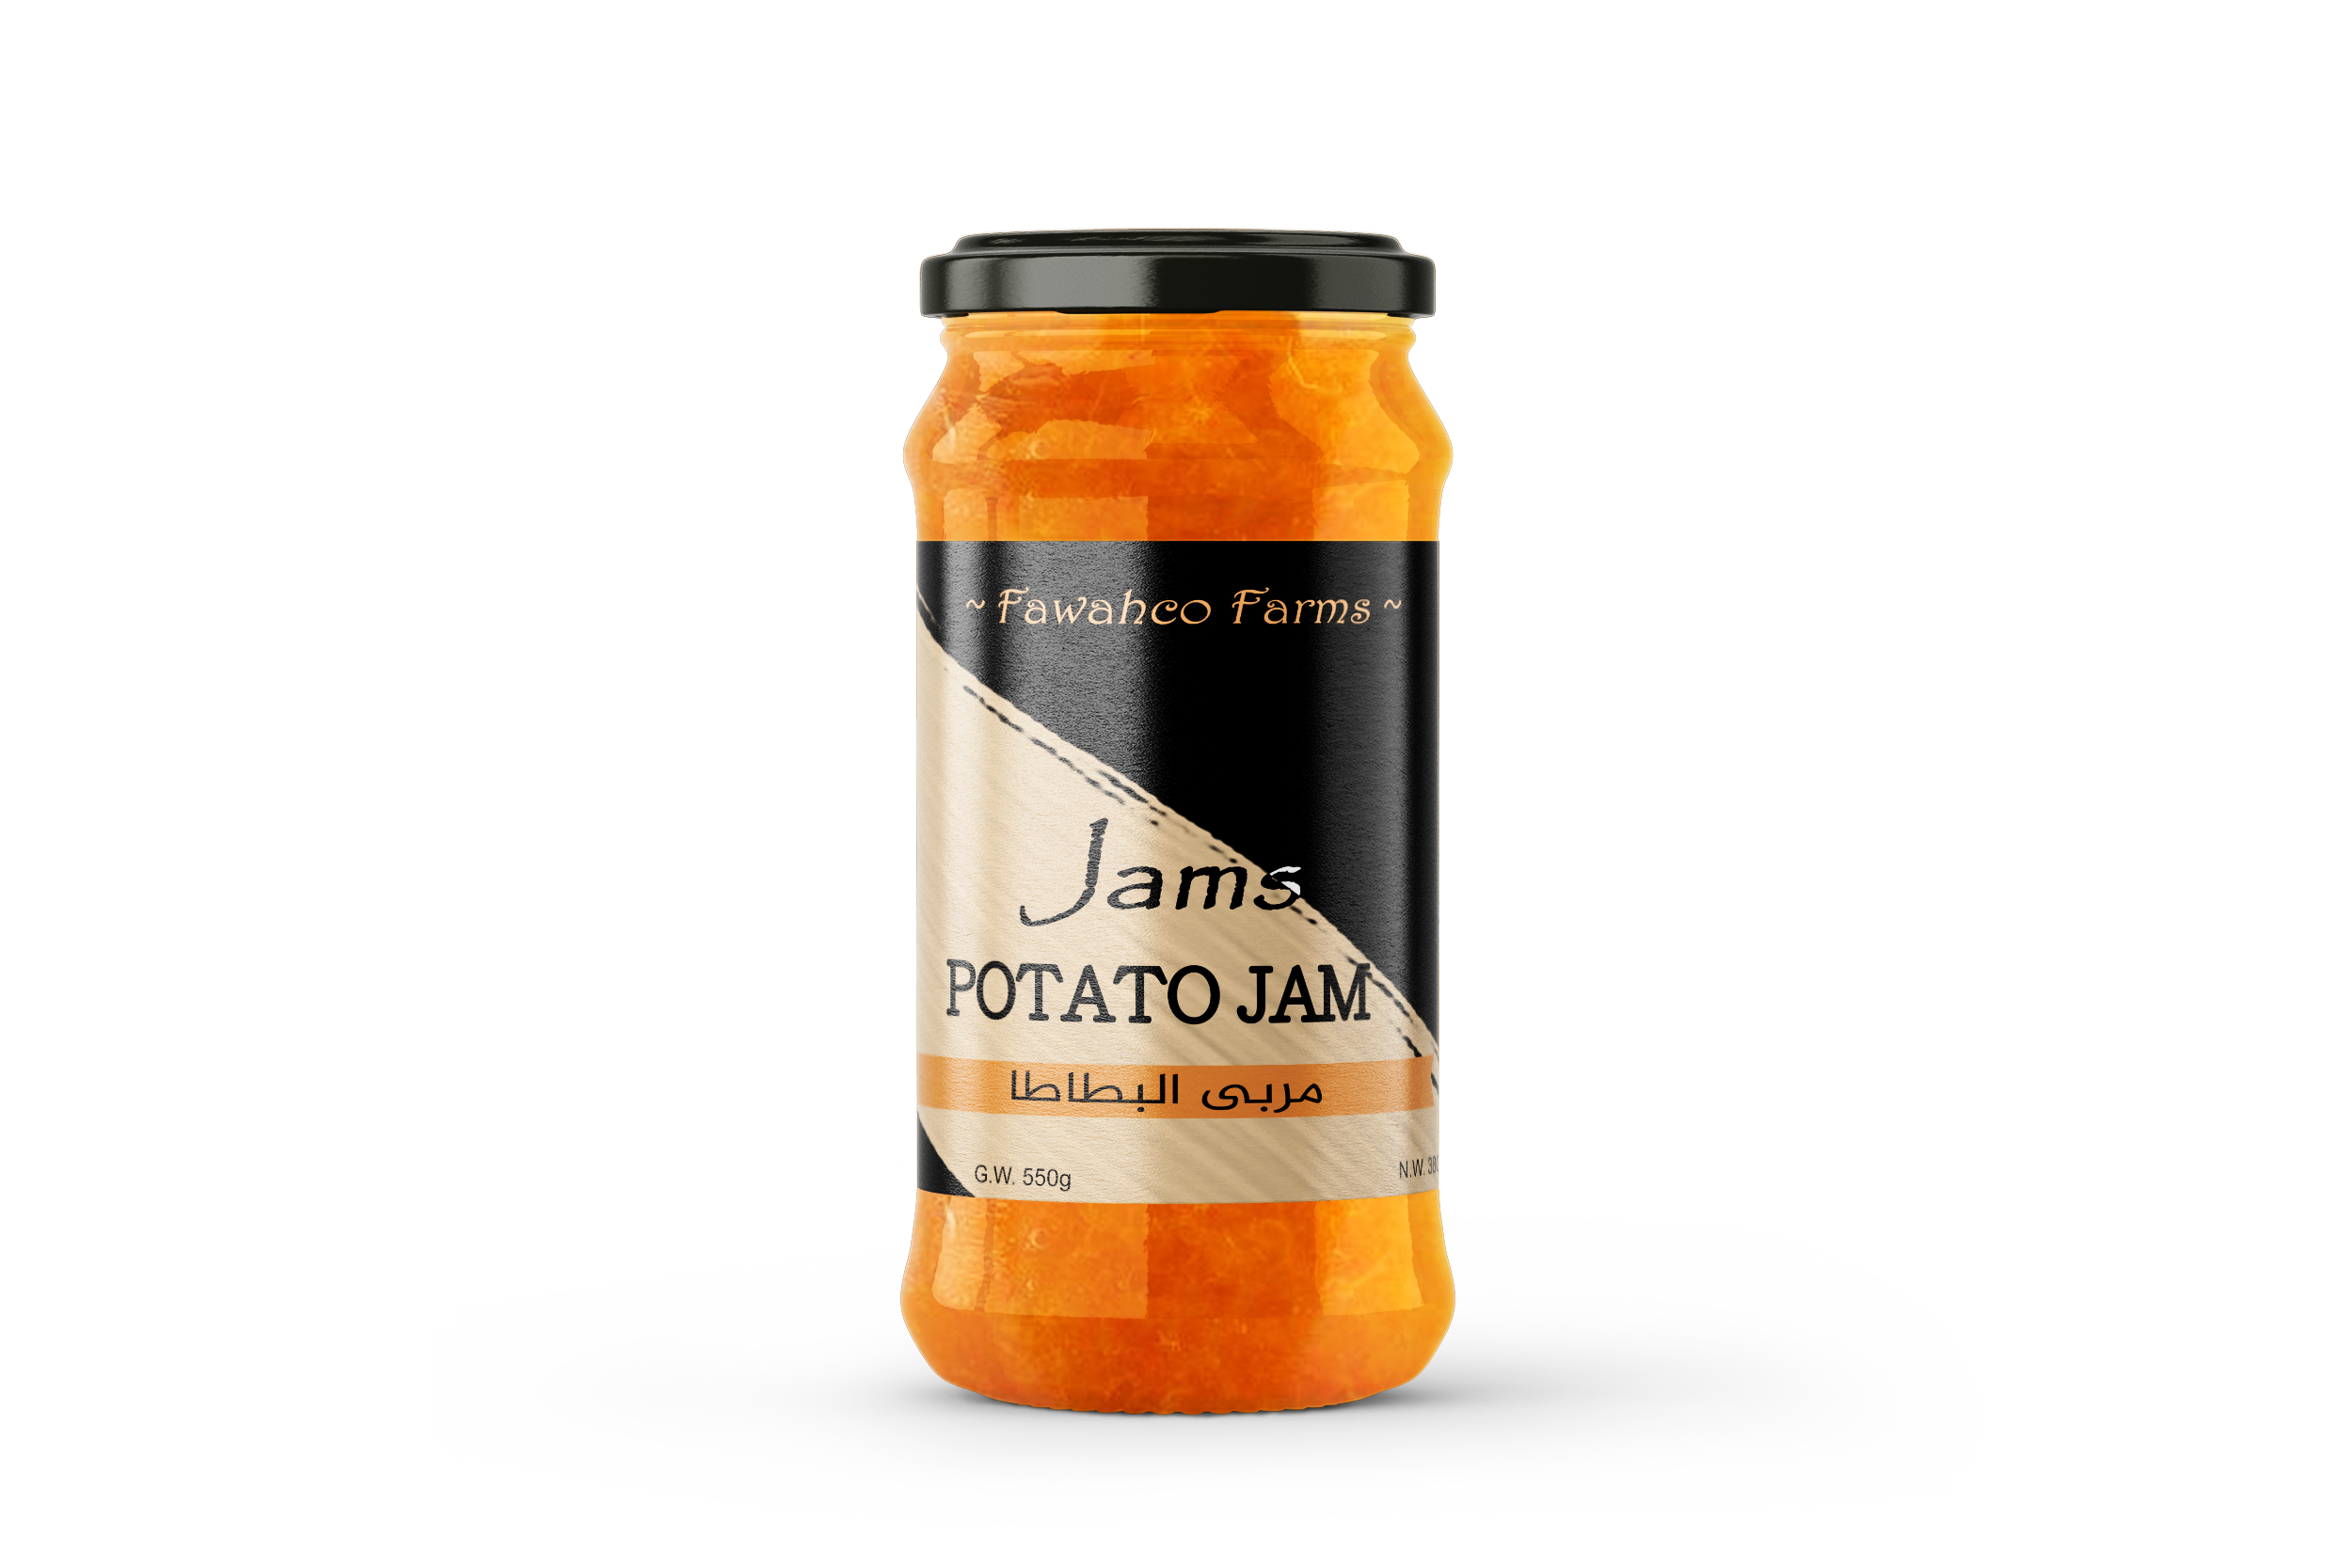 Potato Jam